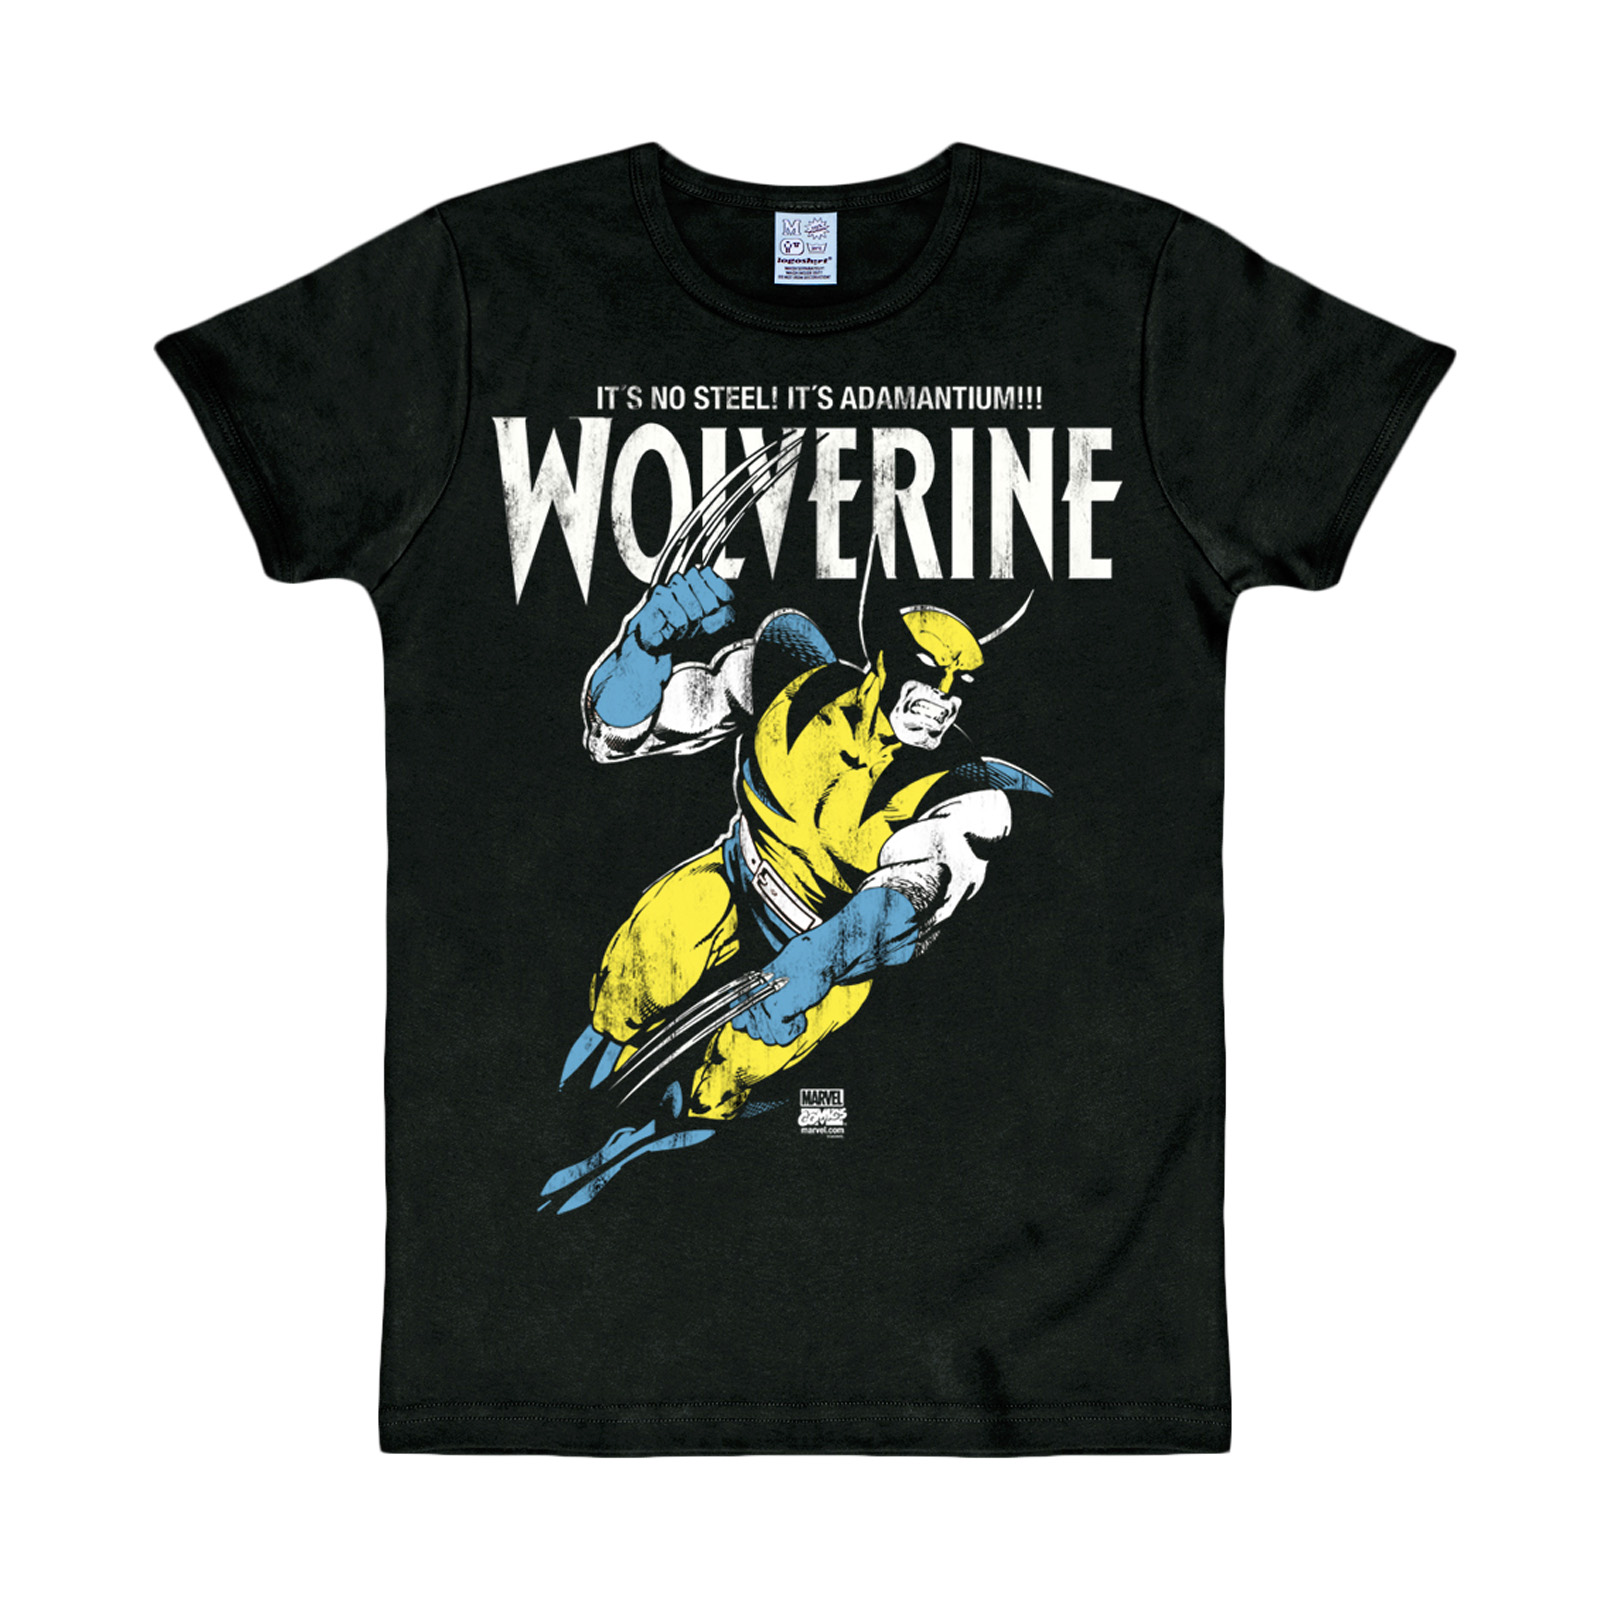 Wolverine - Adamantium T-Shirt Slim Fit